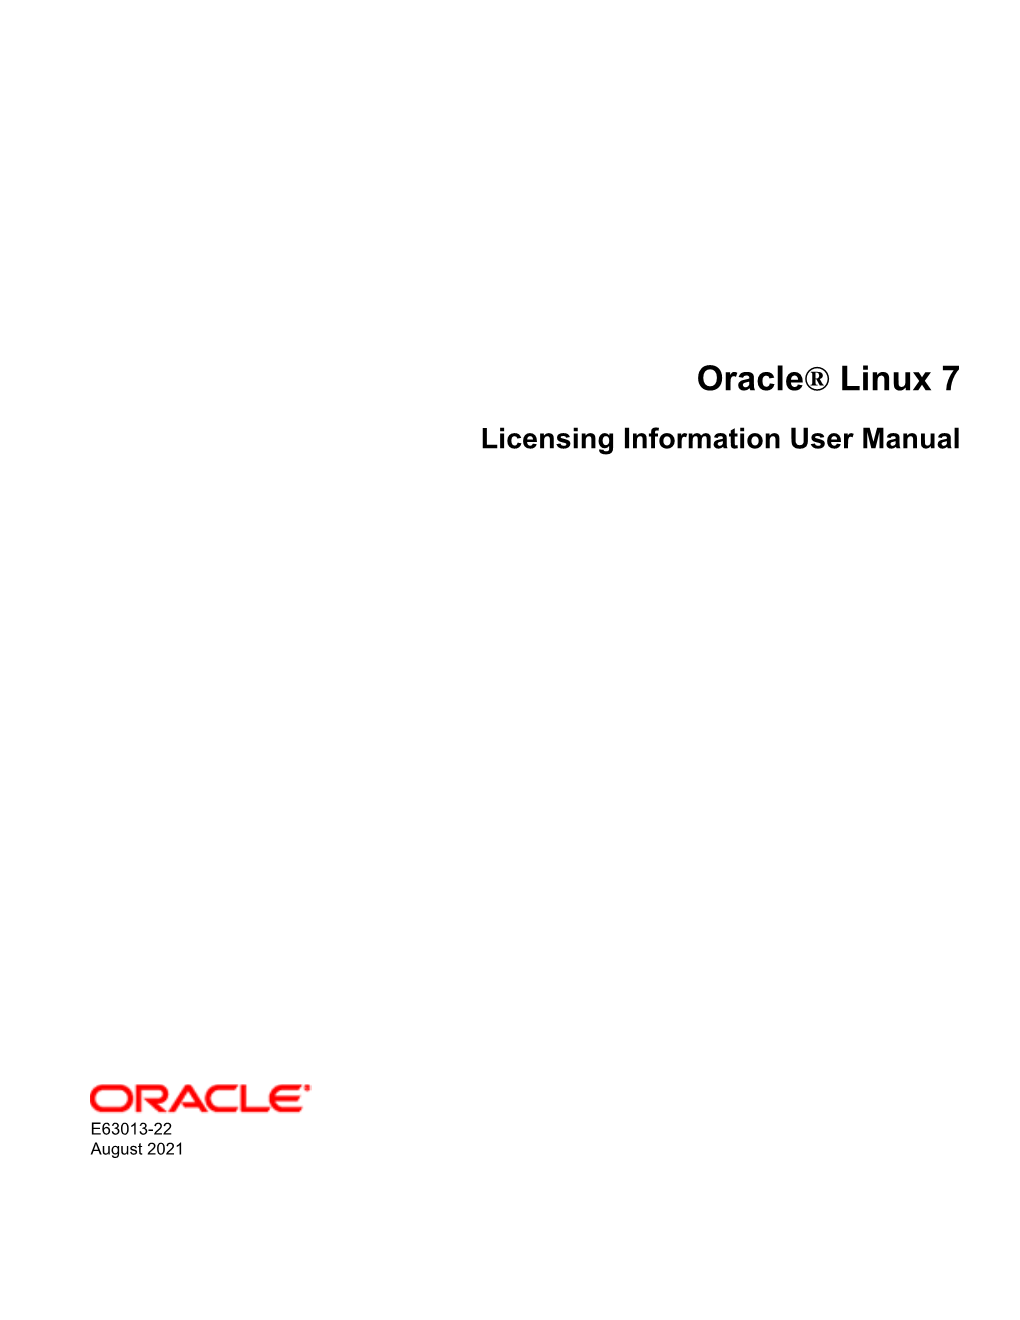 Oracle® Linux 7 Licensing Information User Manual